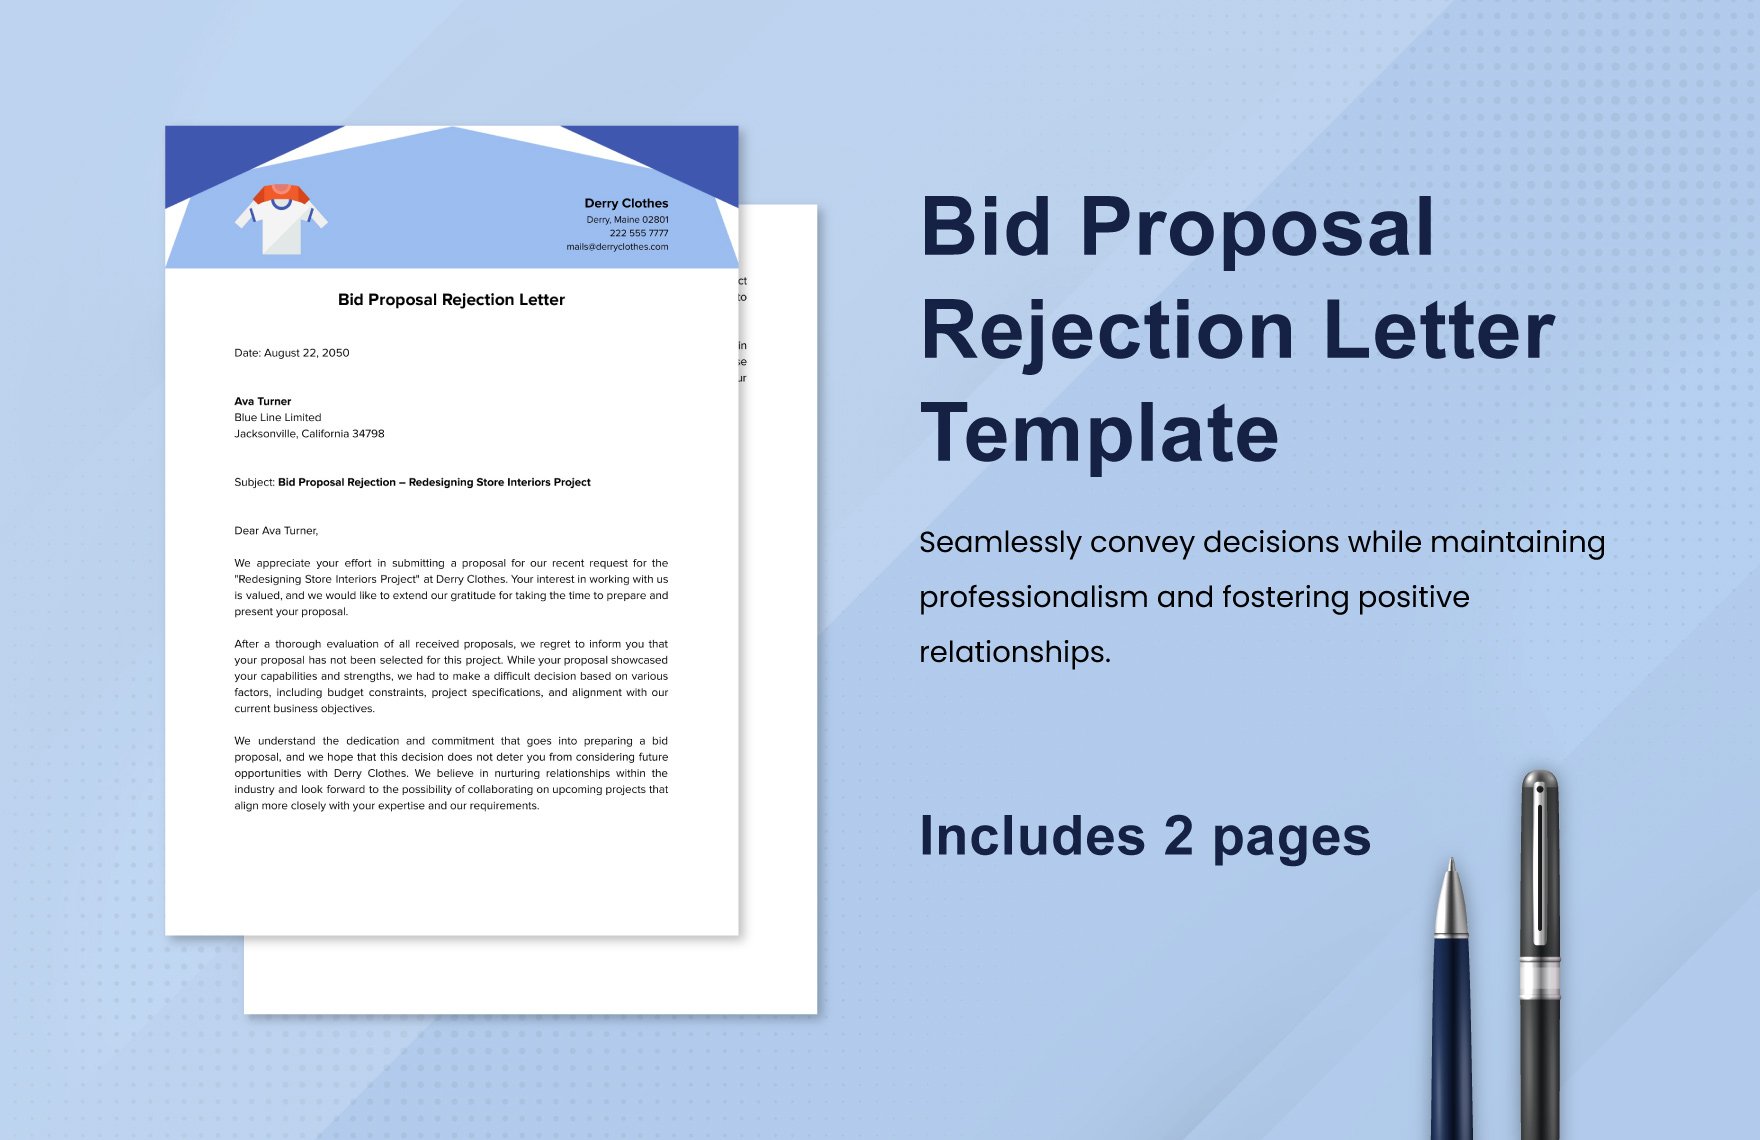 Bid Proposal Rejection Letter Template